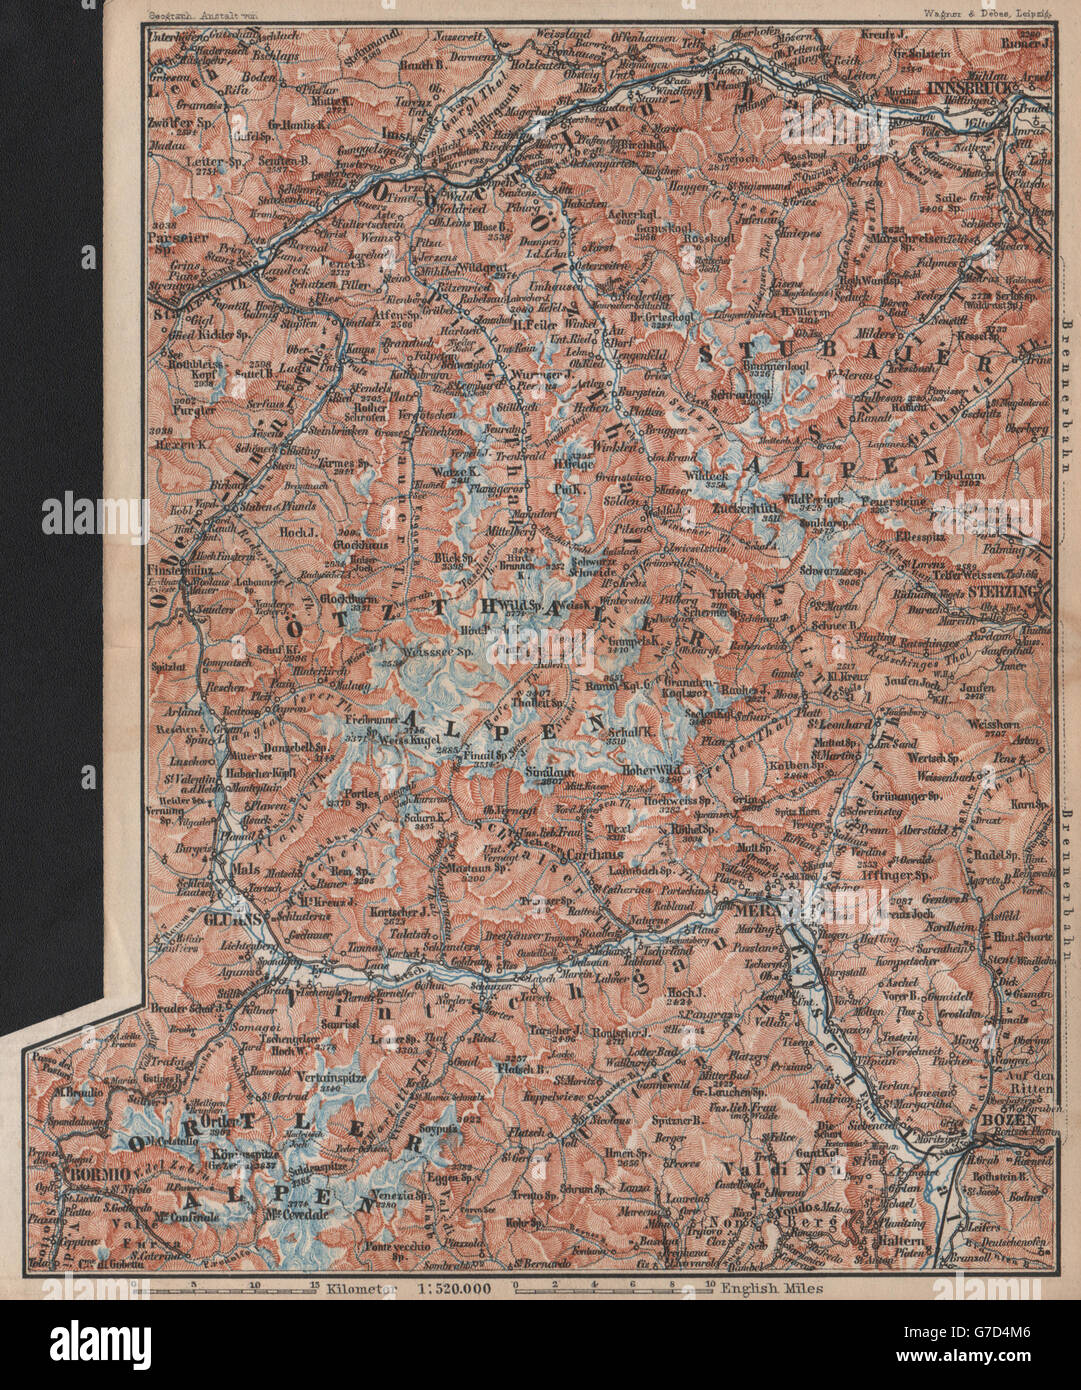 TYROL/ UPPER INNTHAL ÖTZTHALER ORTLER STUBAIER ALPEN topo-map. Austria, 1896 Stock Photo